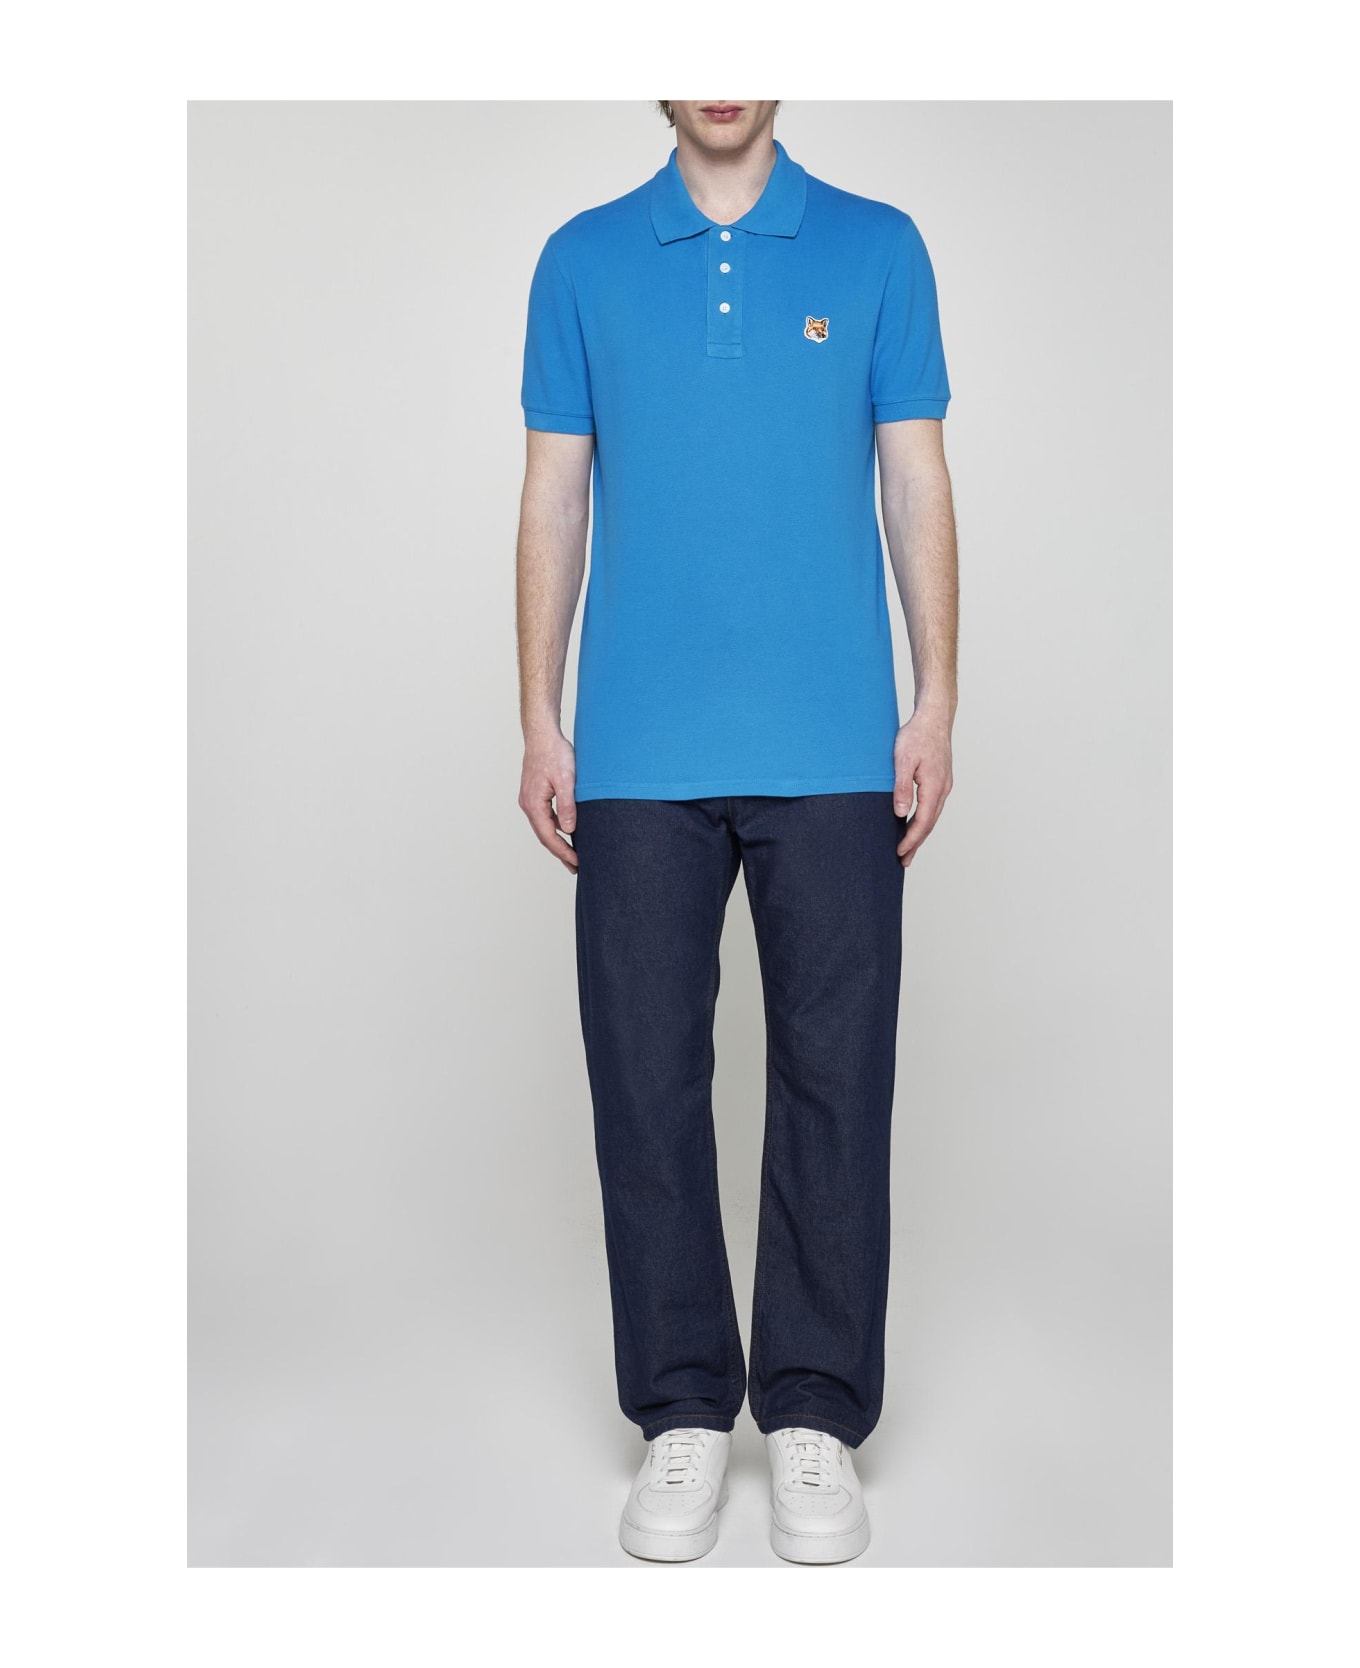 Maison Kitsuné Fox Head Patch Cotton Polo Shirt - Blue